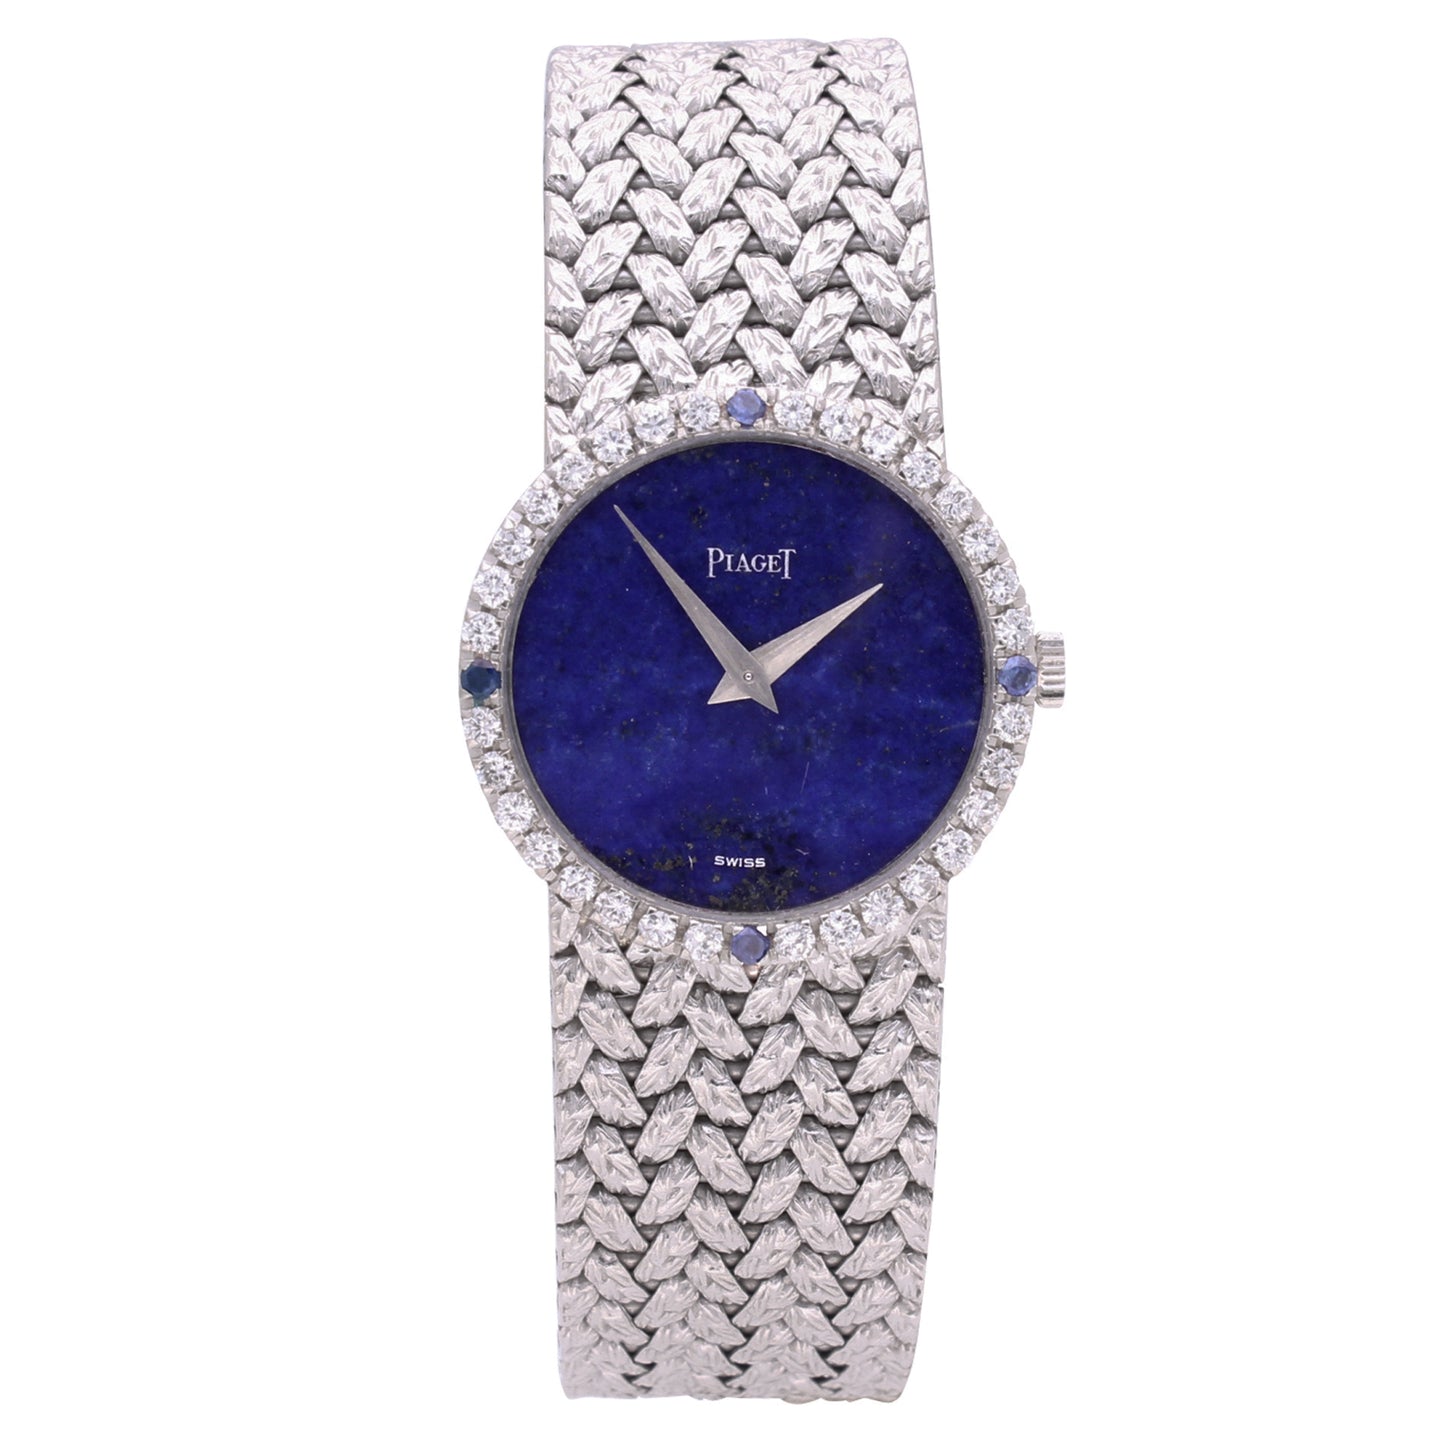 18ct white gold Piaget bracelet watch with lapis lazuli dial and diamond set bezel . Made 1970